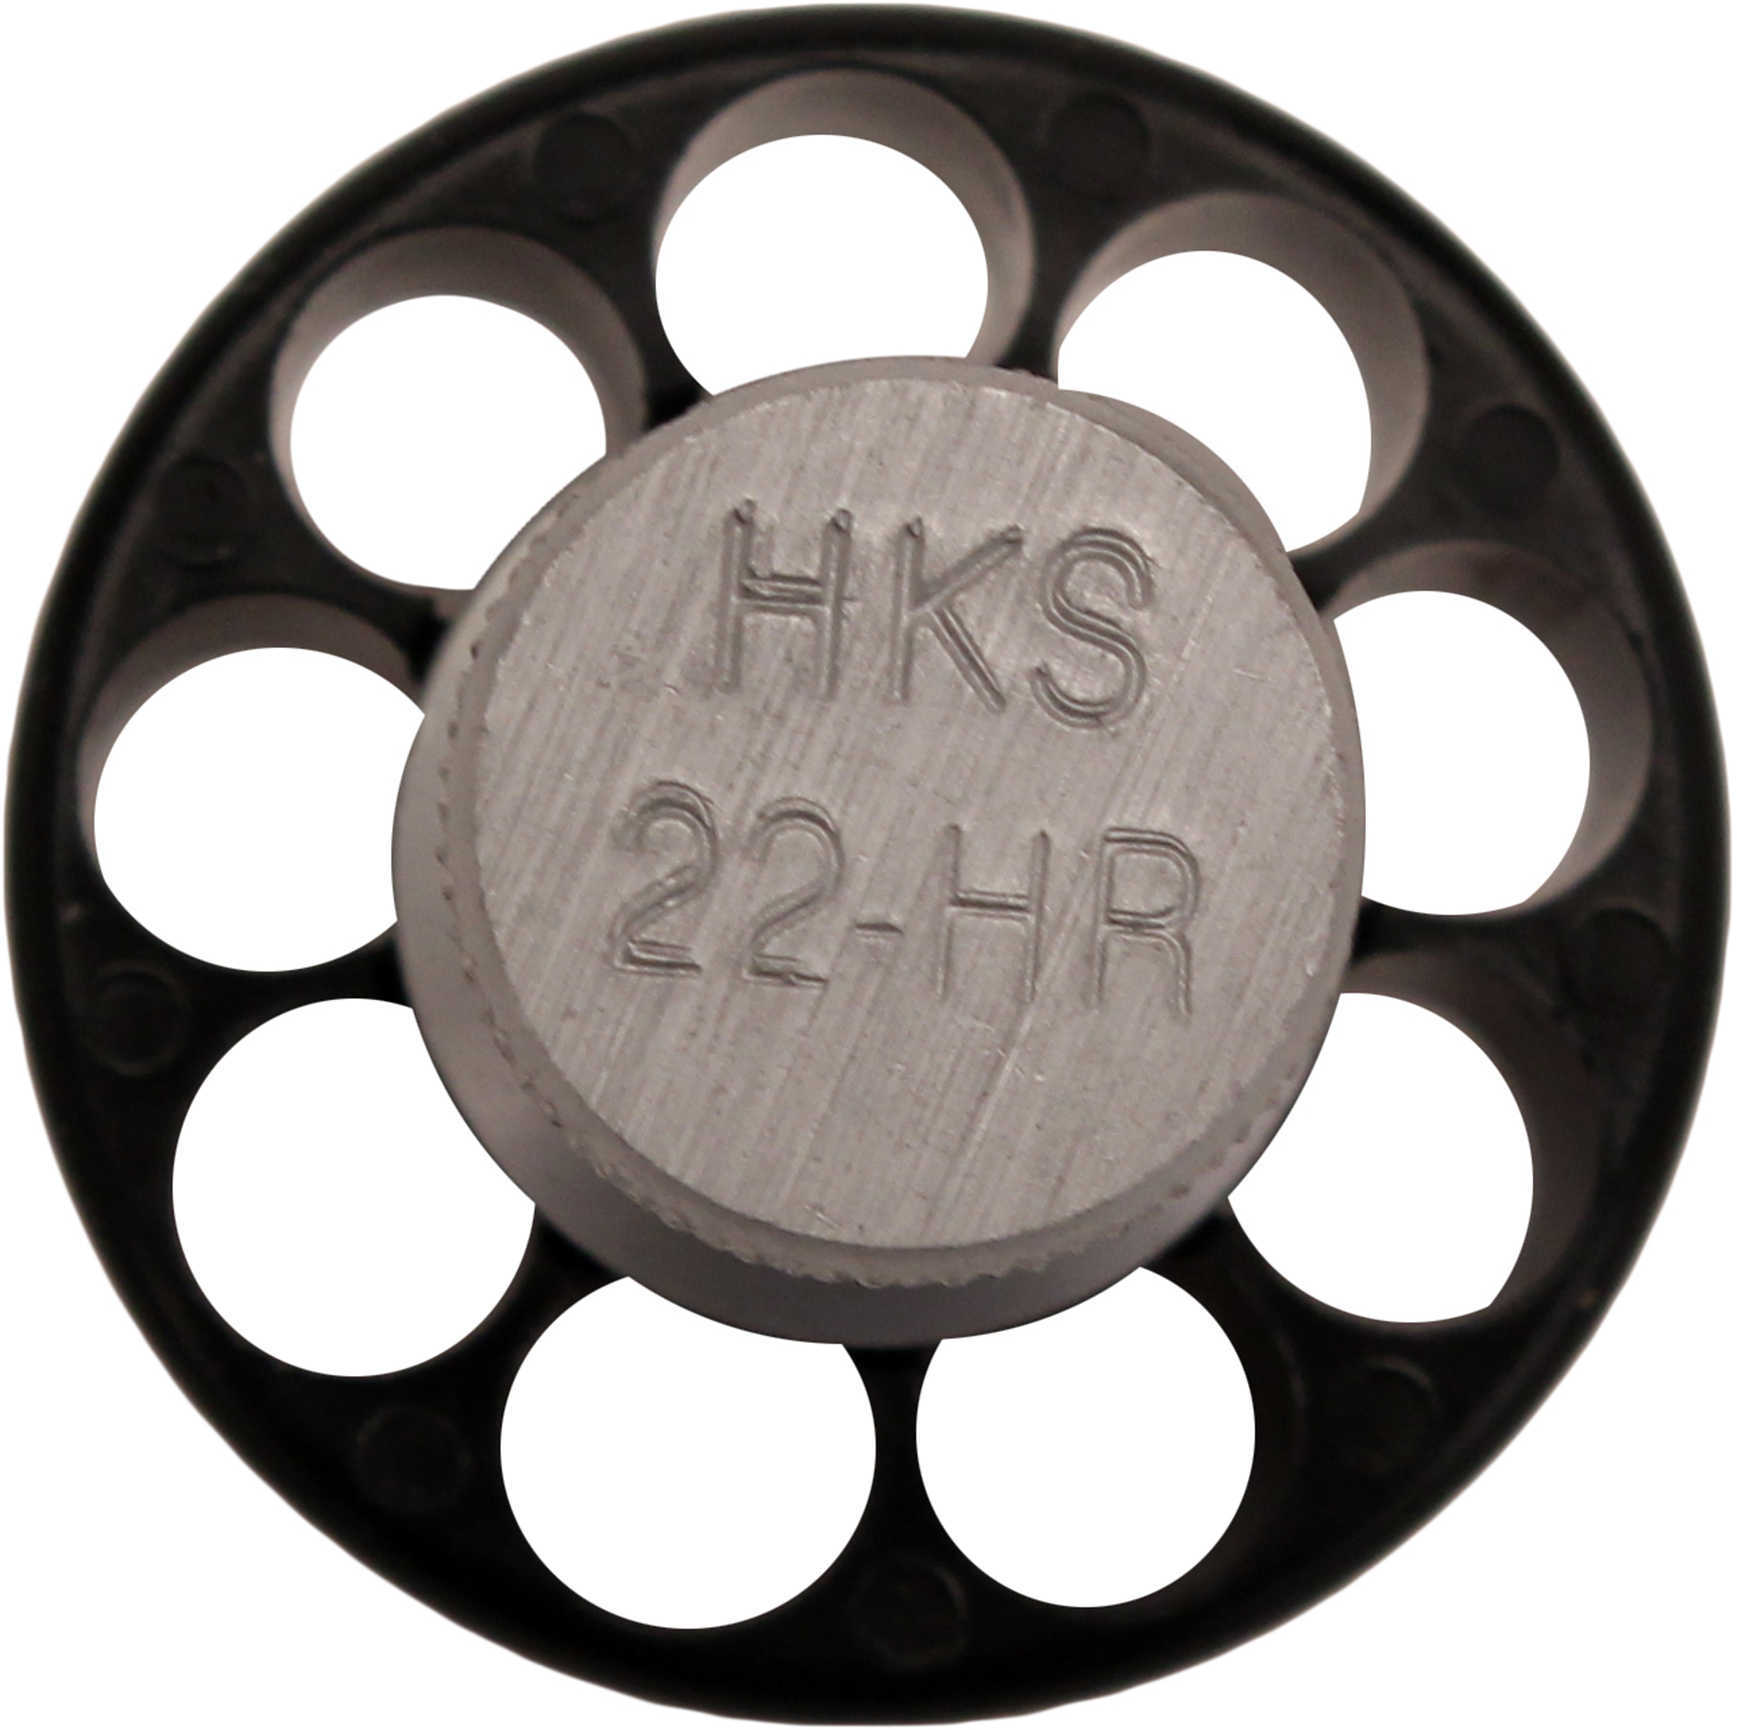 HKS 22LR M Series